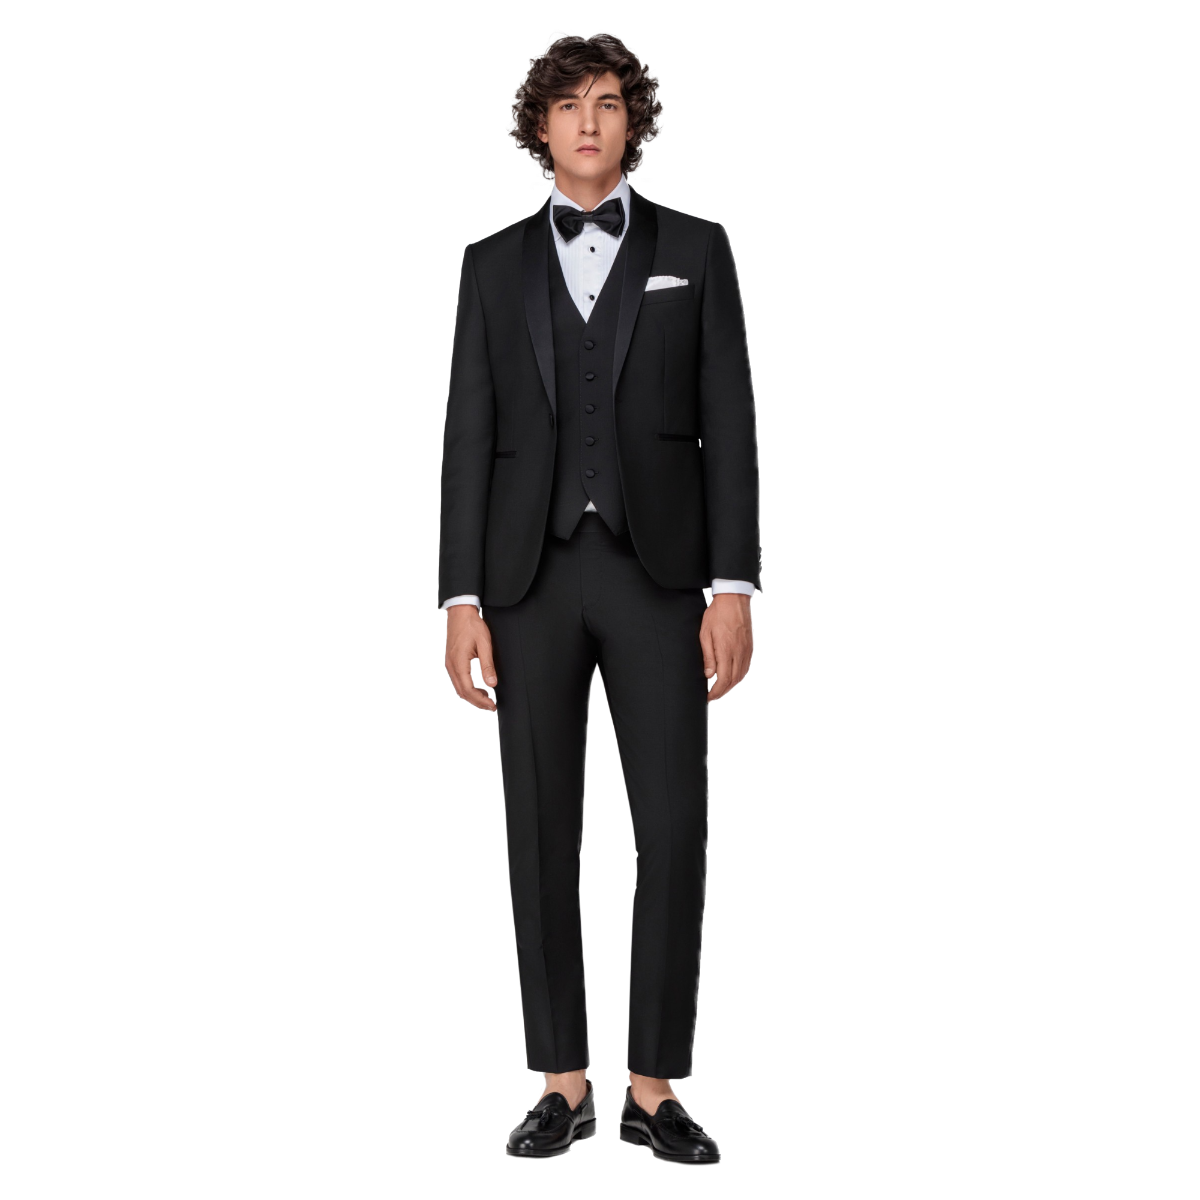 Men's Black Tuxedo Suit